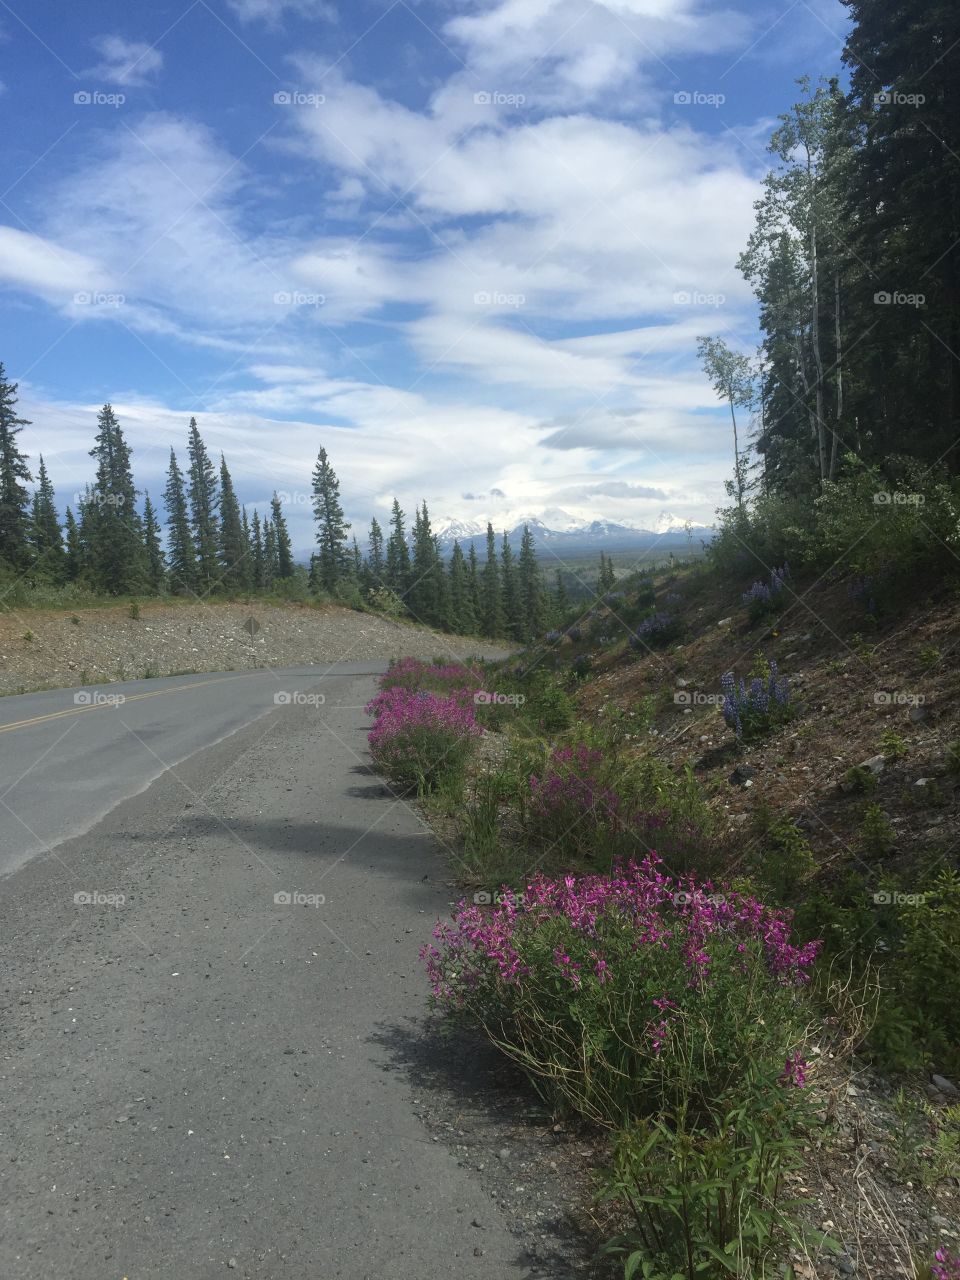 Hunt Mountain Range with purple fireweed along the road, Alaska